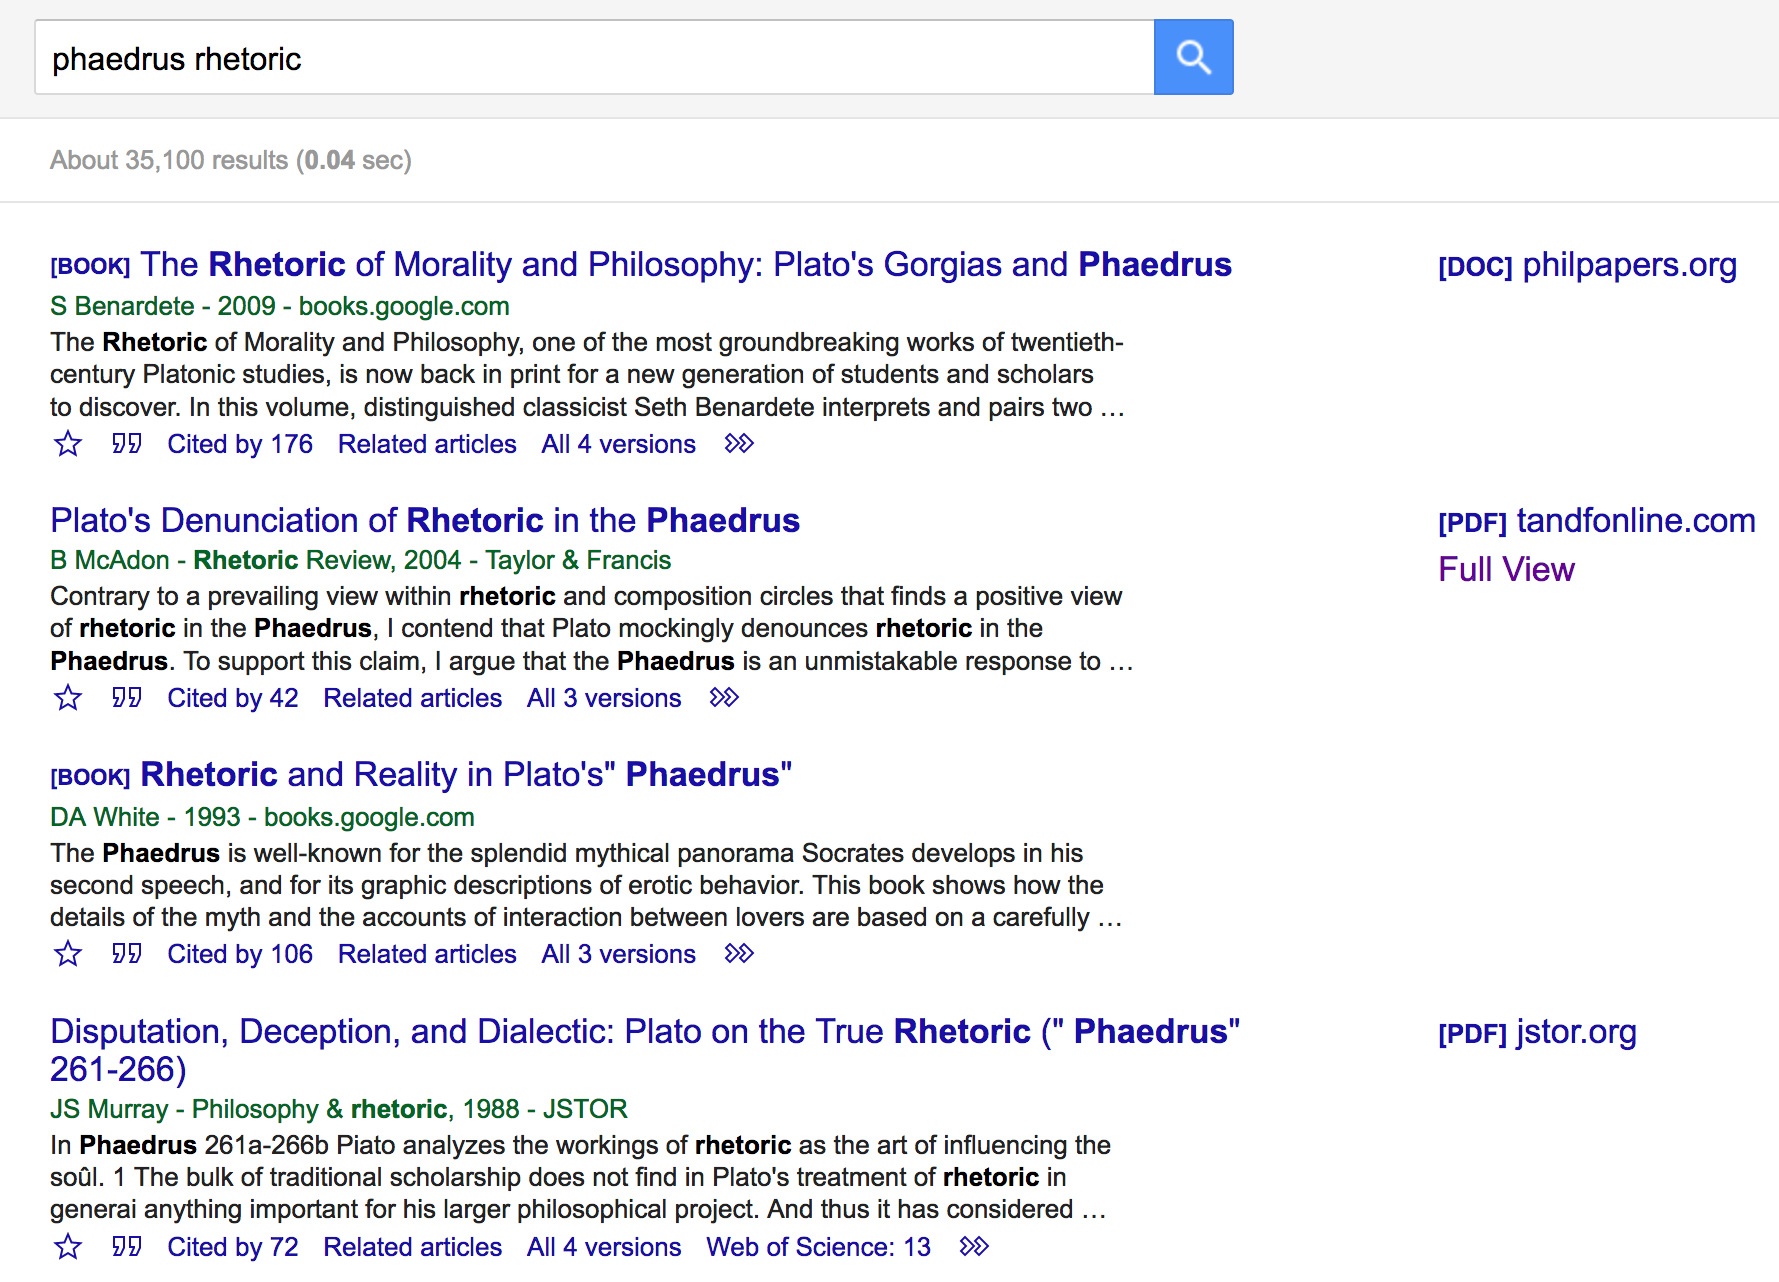 Results for searching "phaedrus rhetoric" in Google Scholar